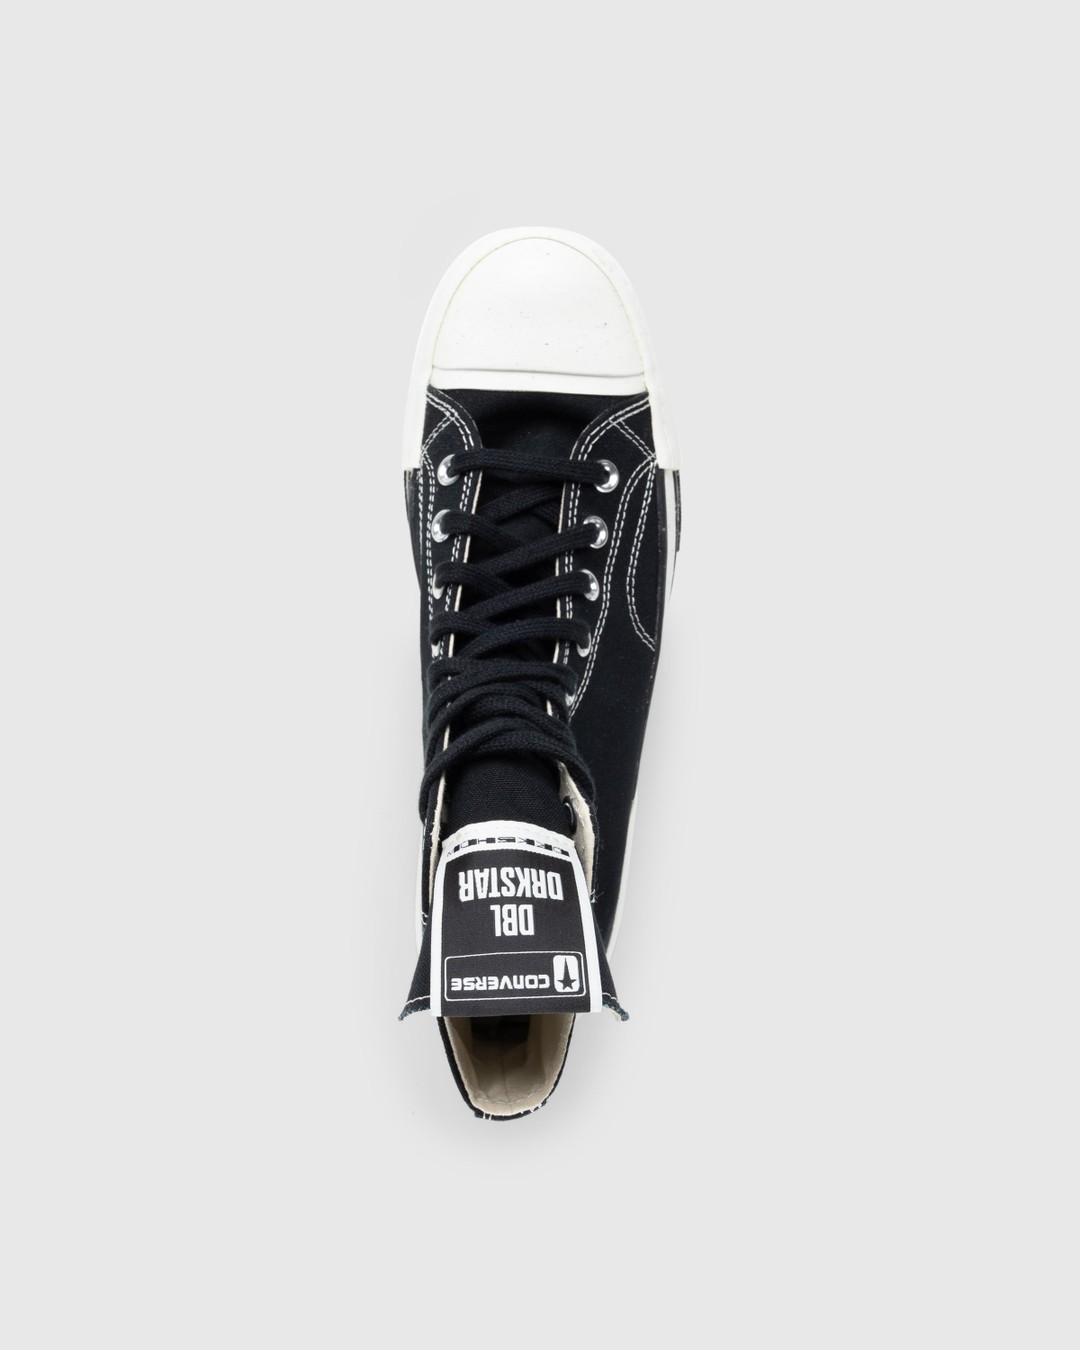 Converse x DRKSHDW – DBL DRKSTAR Chuck 70 HI Black/Egret/White - Sneakers - Multi - Image 5